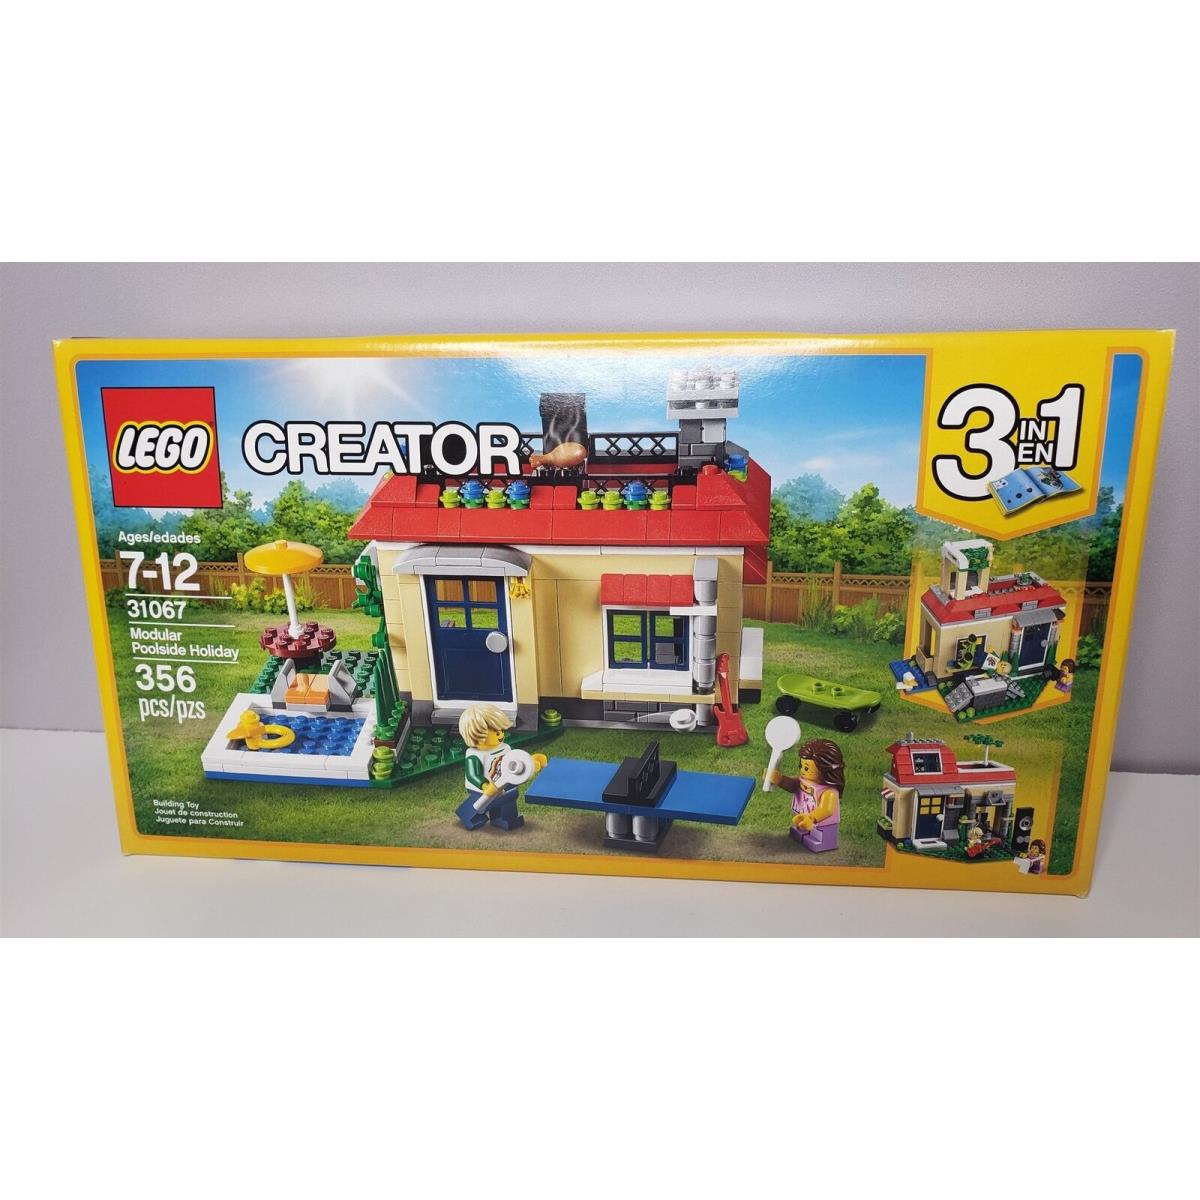 Lego Creator 3 in 1 Modular Poolside Holiday 31067 Set